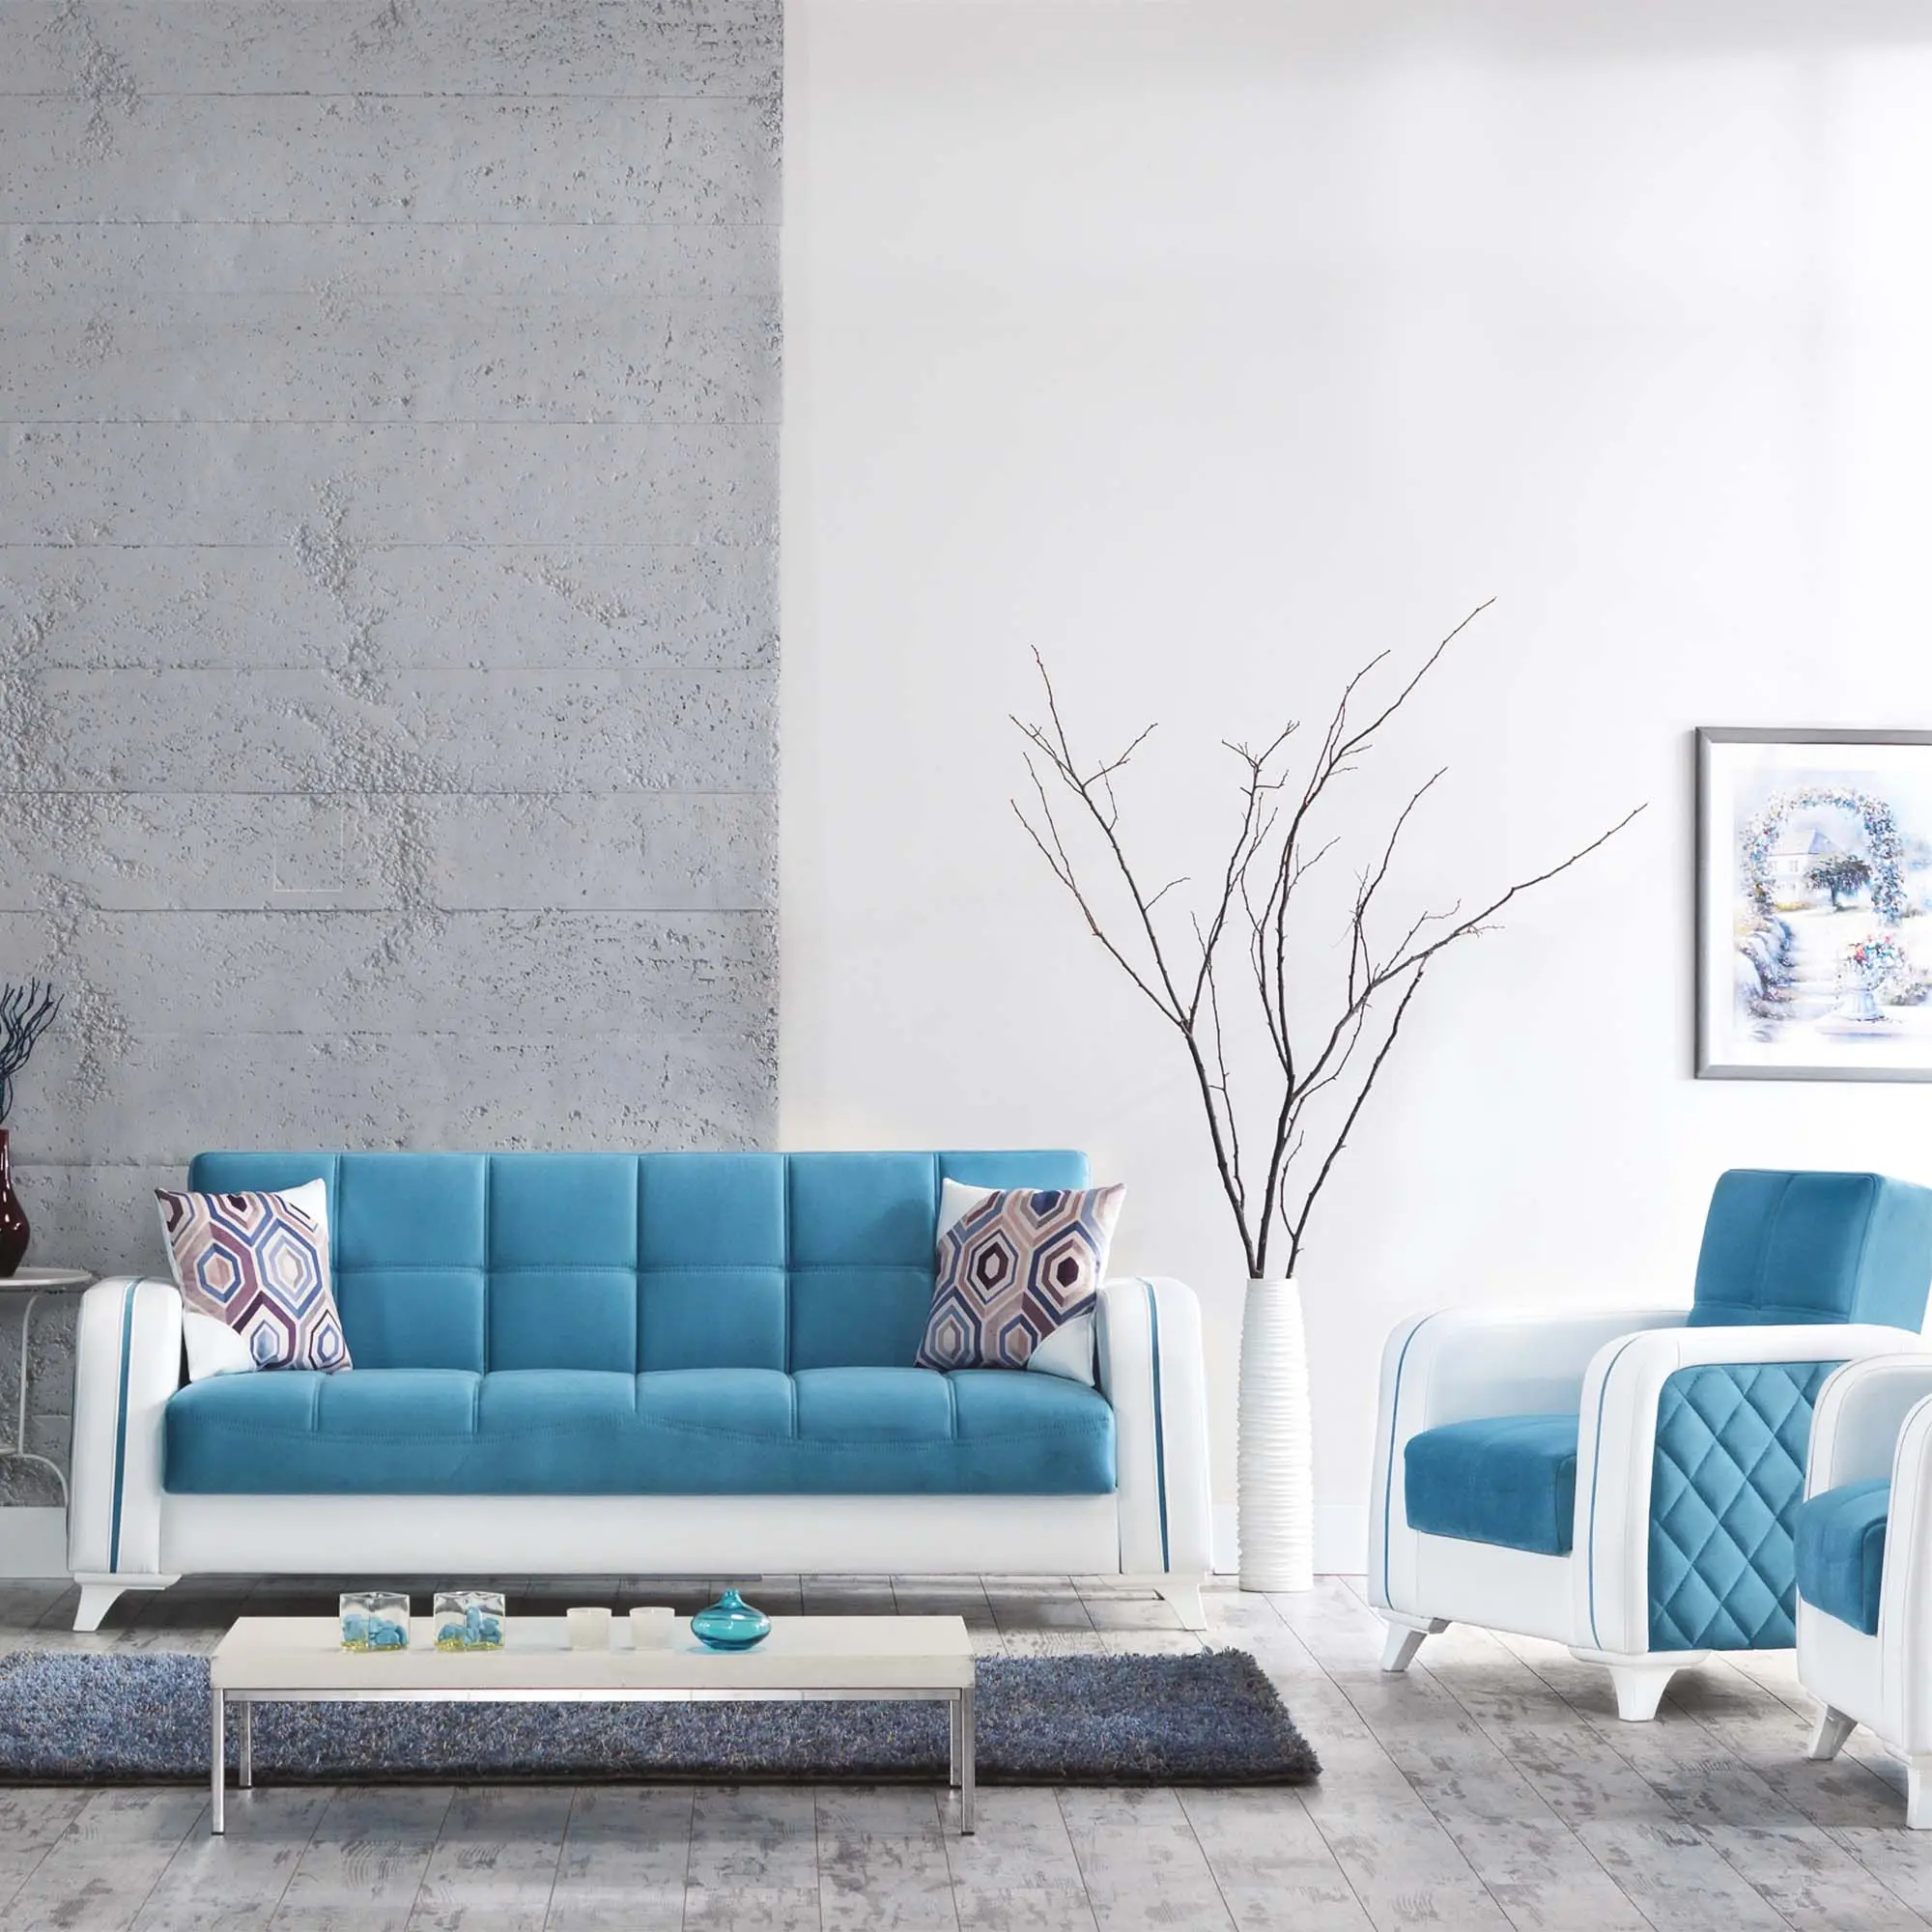 ELITE SOFA SET Neues Modell Möbel Schlafs ofa SERHAT Wohn möbel Top Stoff Modern High Quality New Multi Color